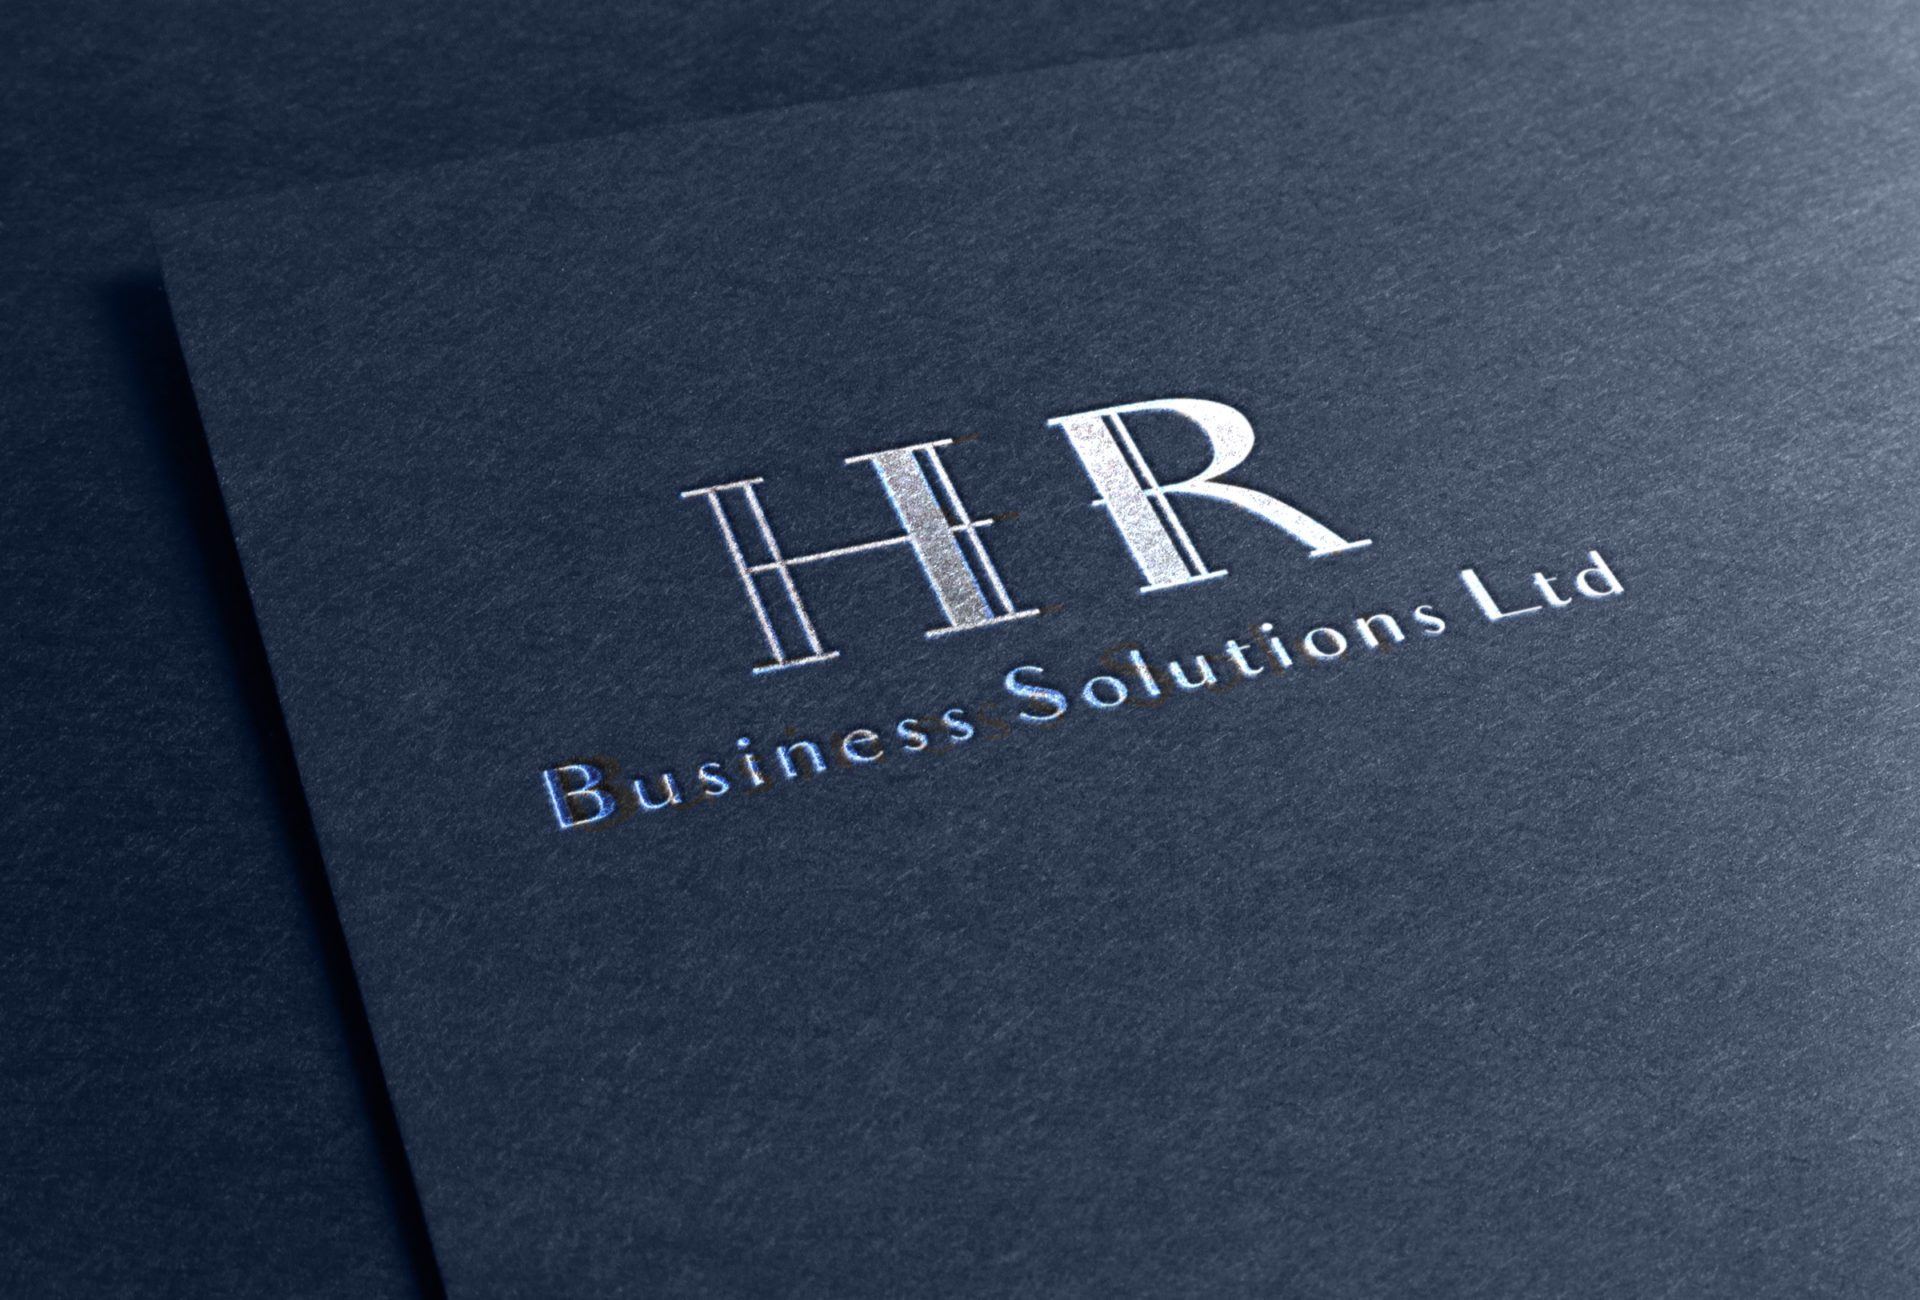 HR Business Solutions Ltd